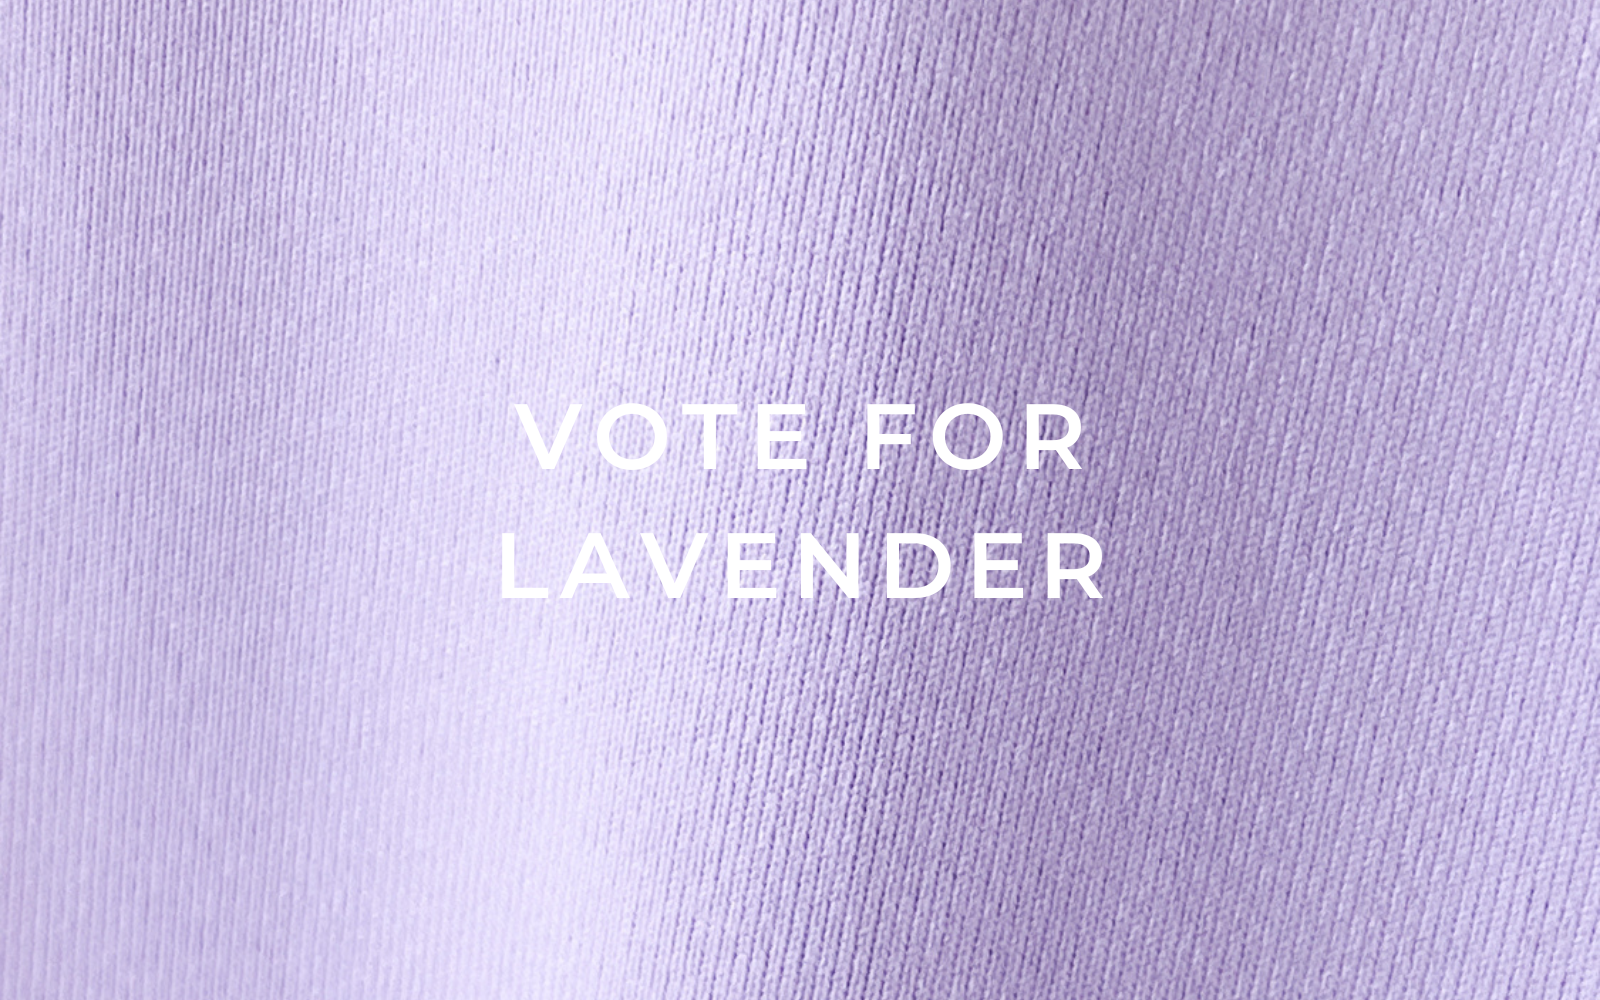 Vote for Lavender